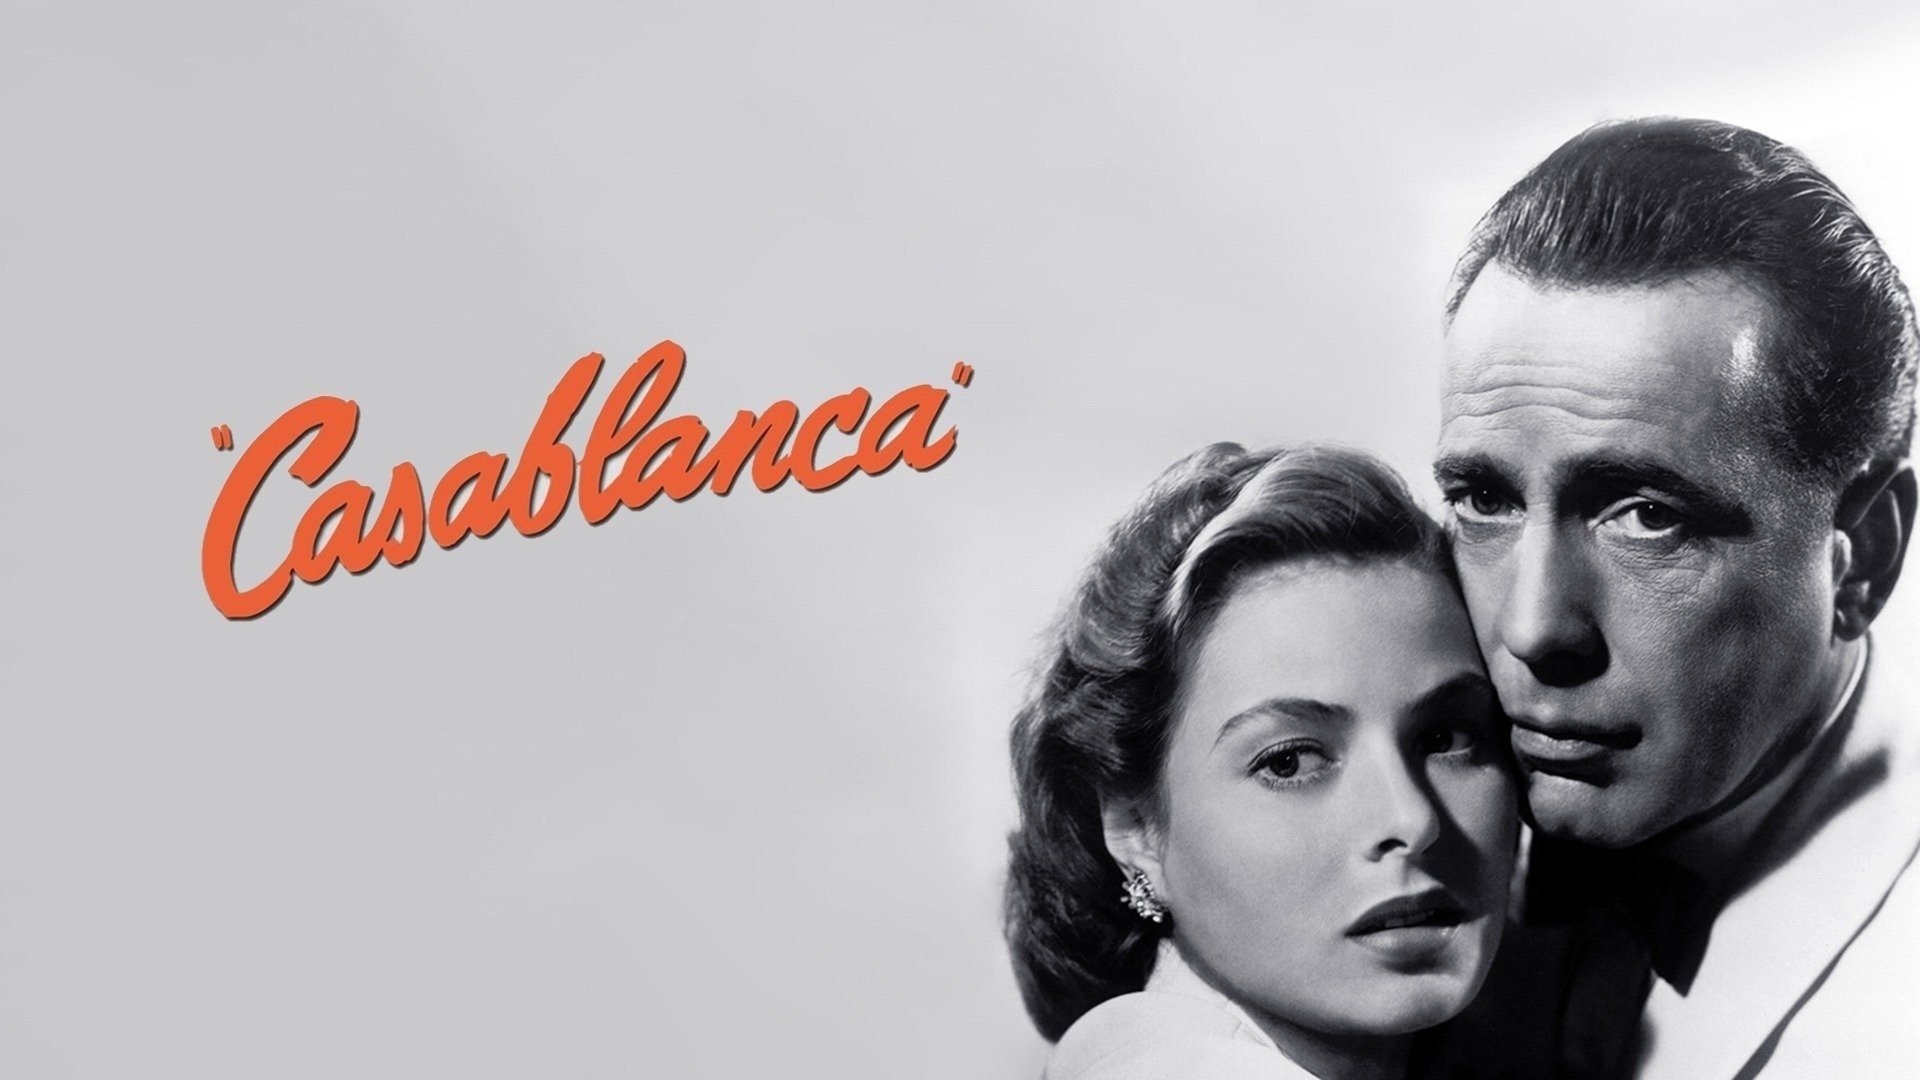 Casablanca Movie Wallpapers - Top Free Casablanca Movie Backgrounds 1920x1080